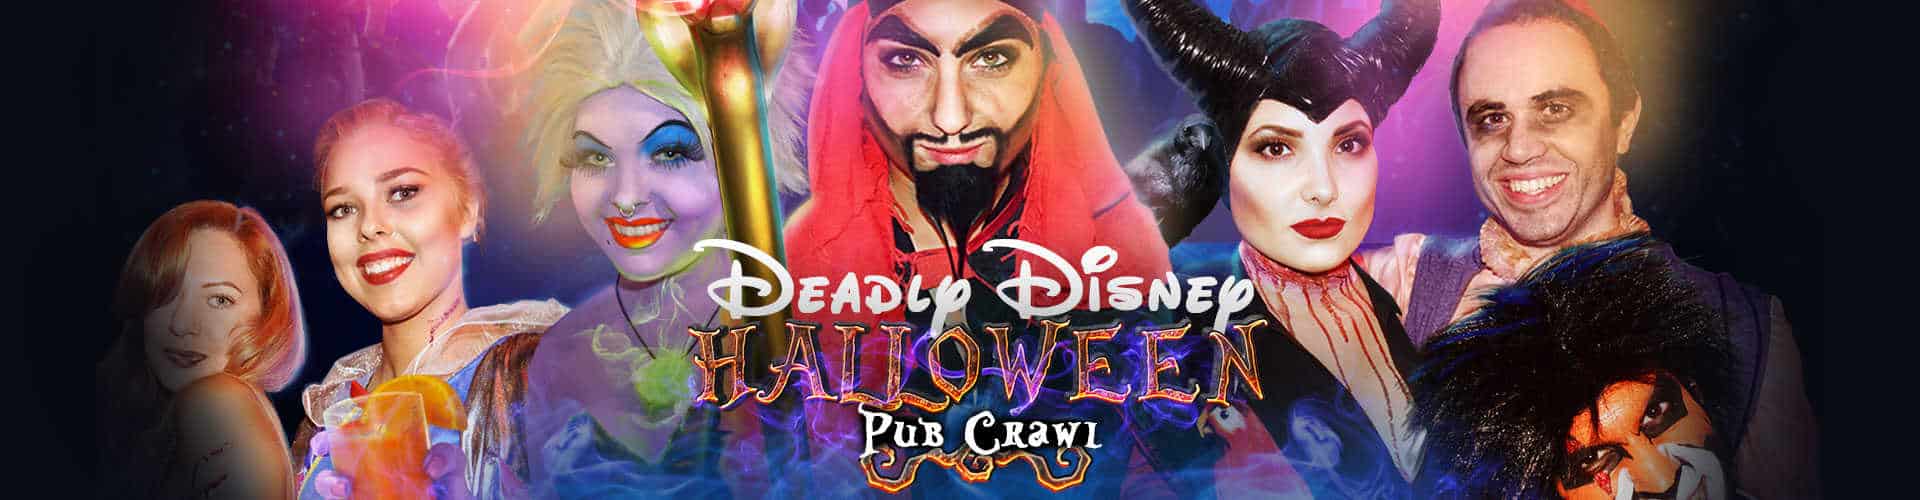 Deadly Disney Halloween BG